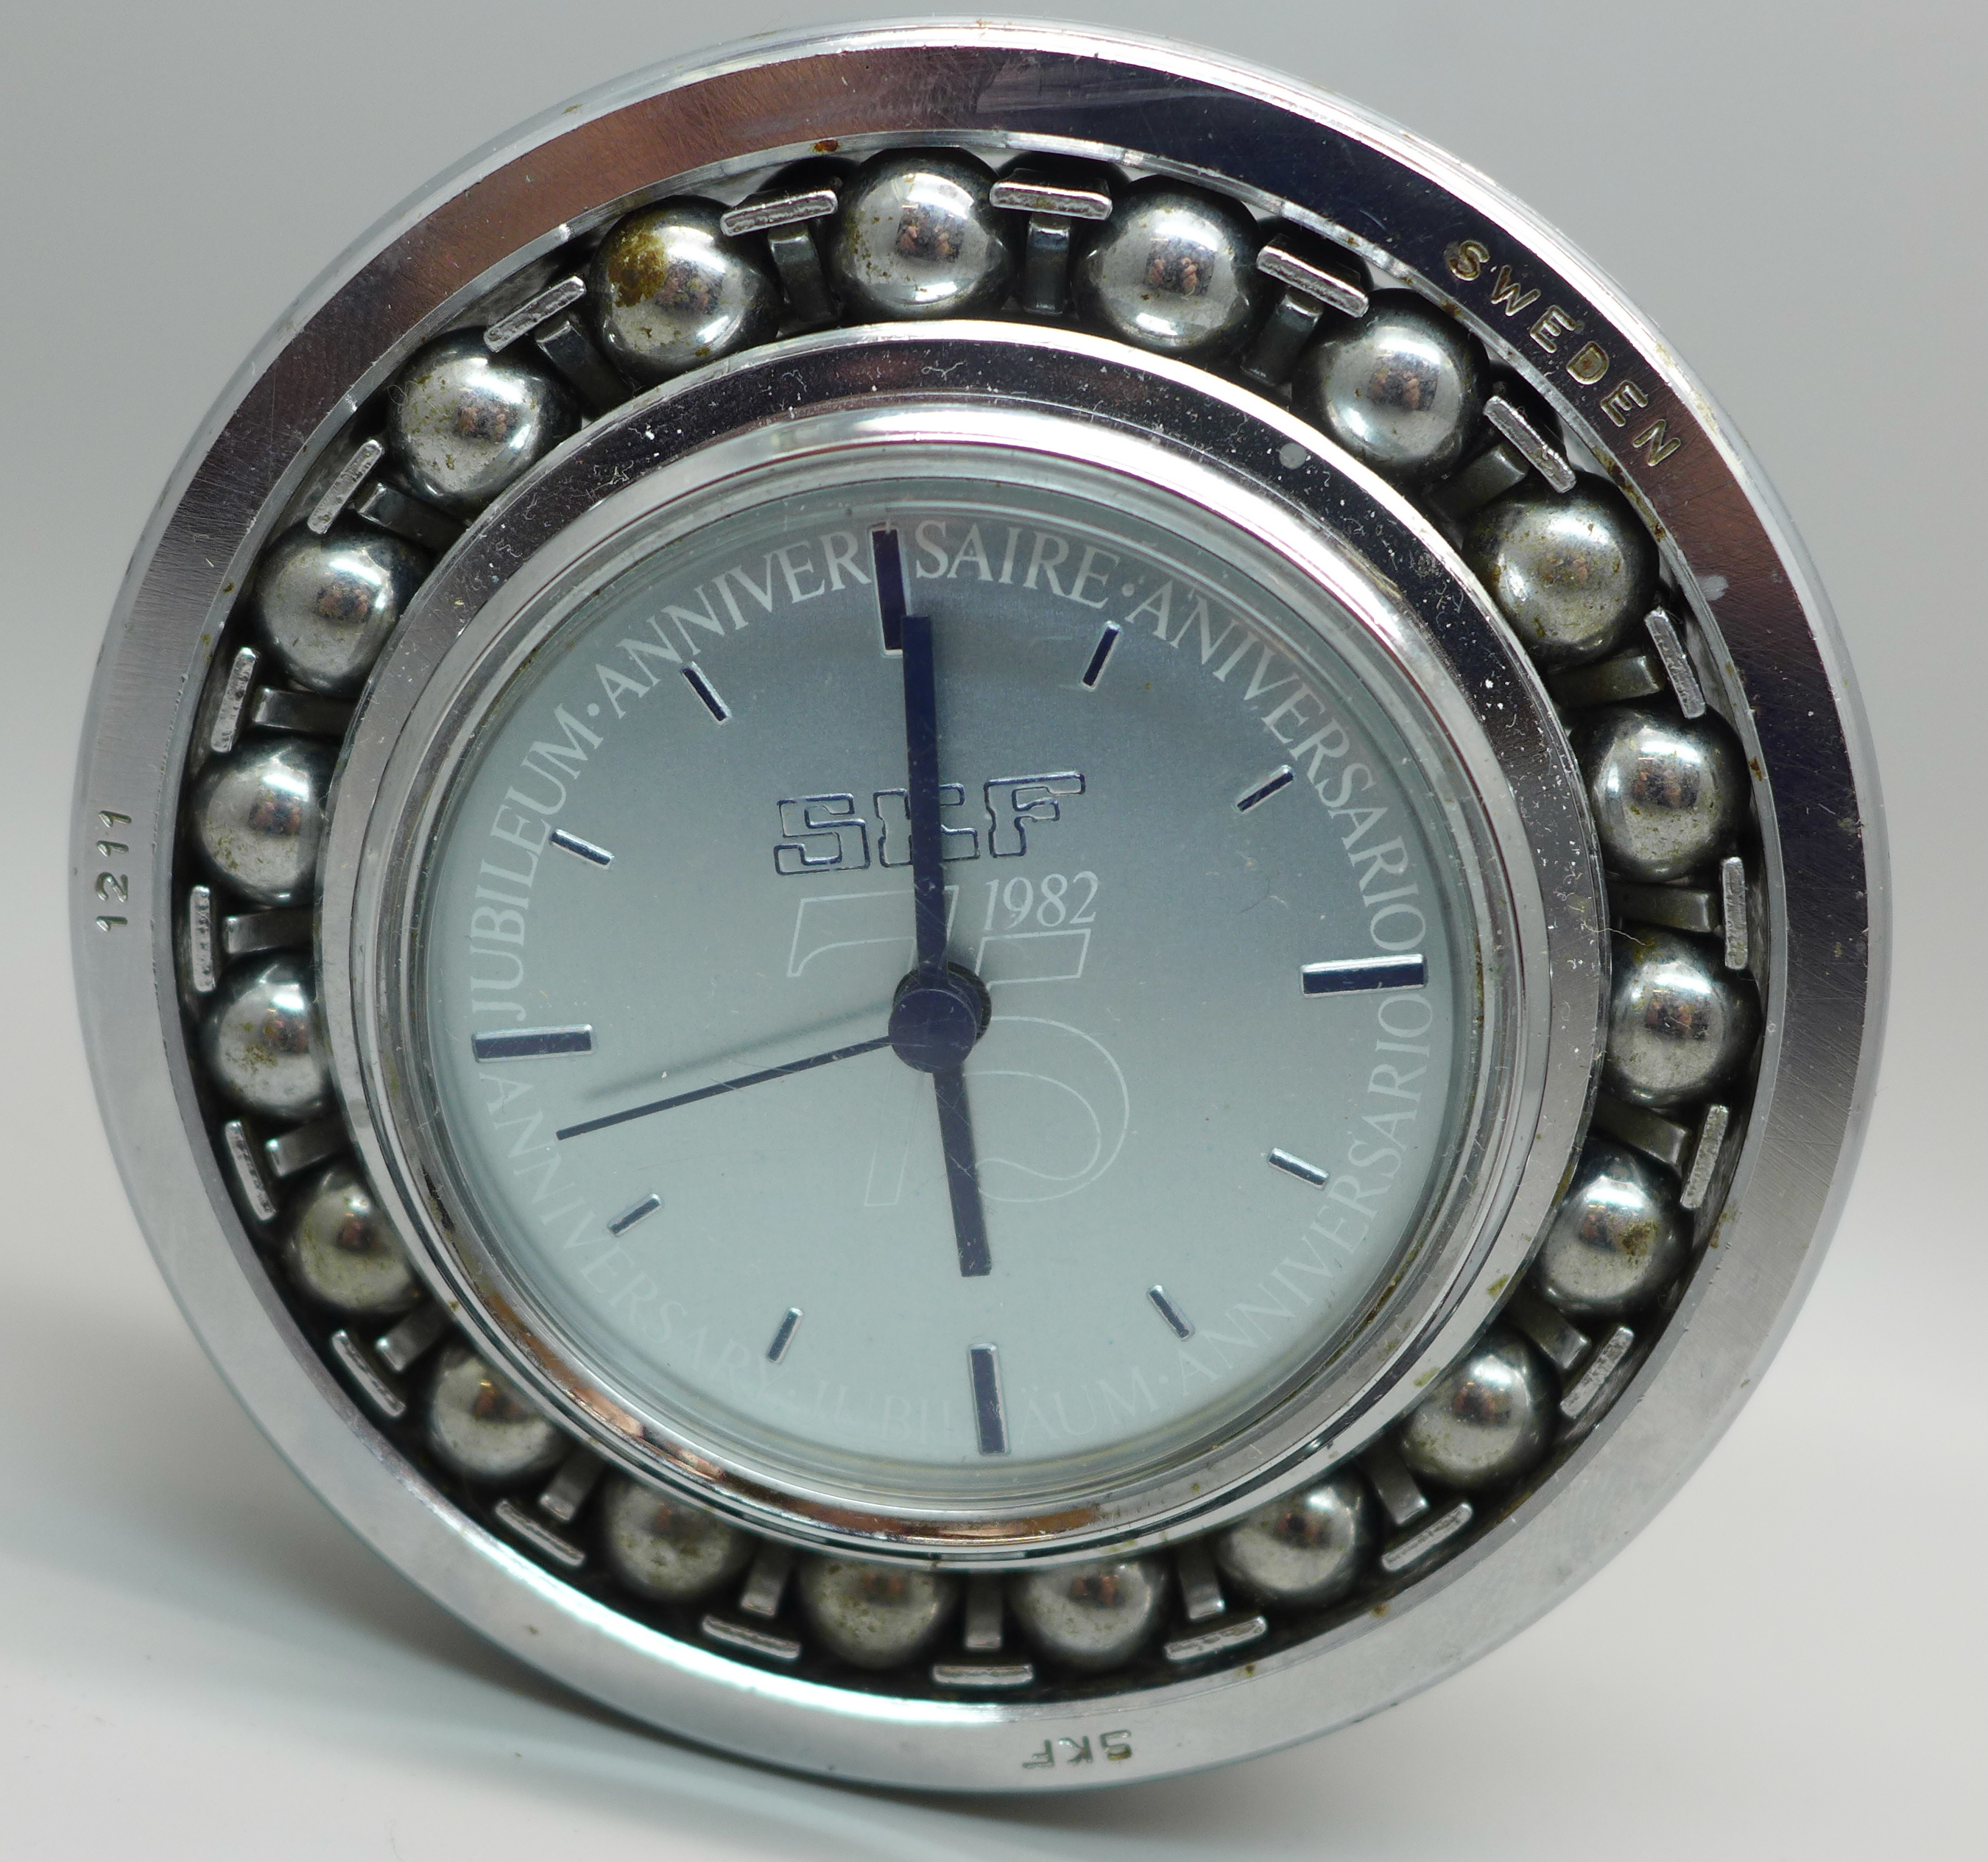 A commemorative SKF Swedish wheel bearing clock